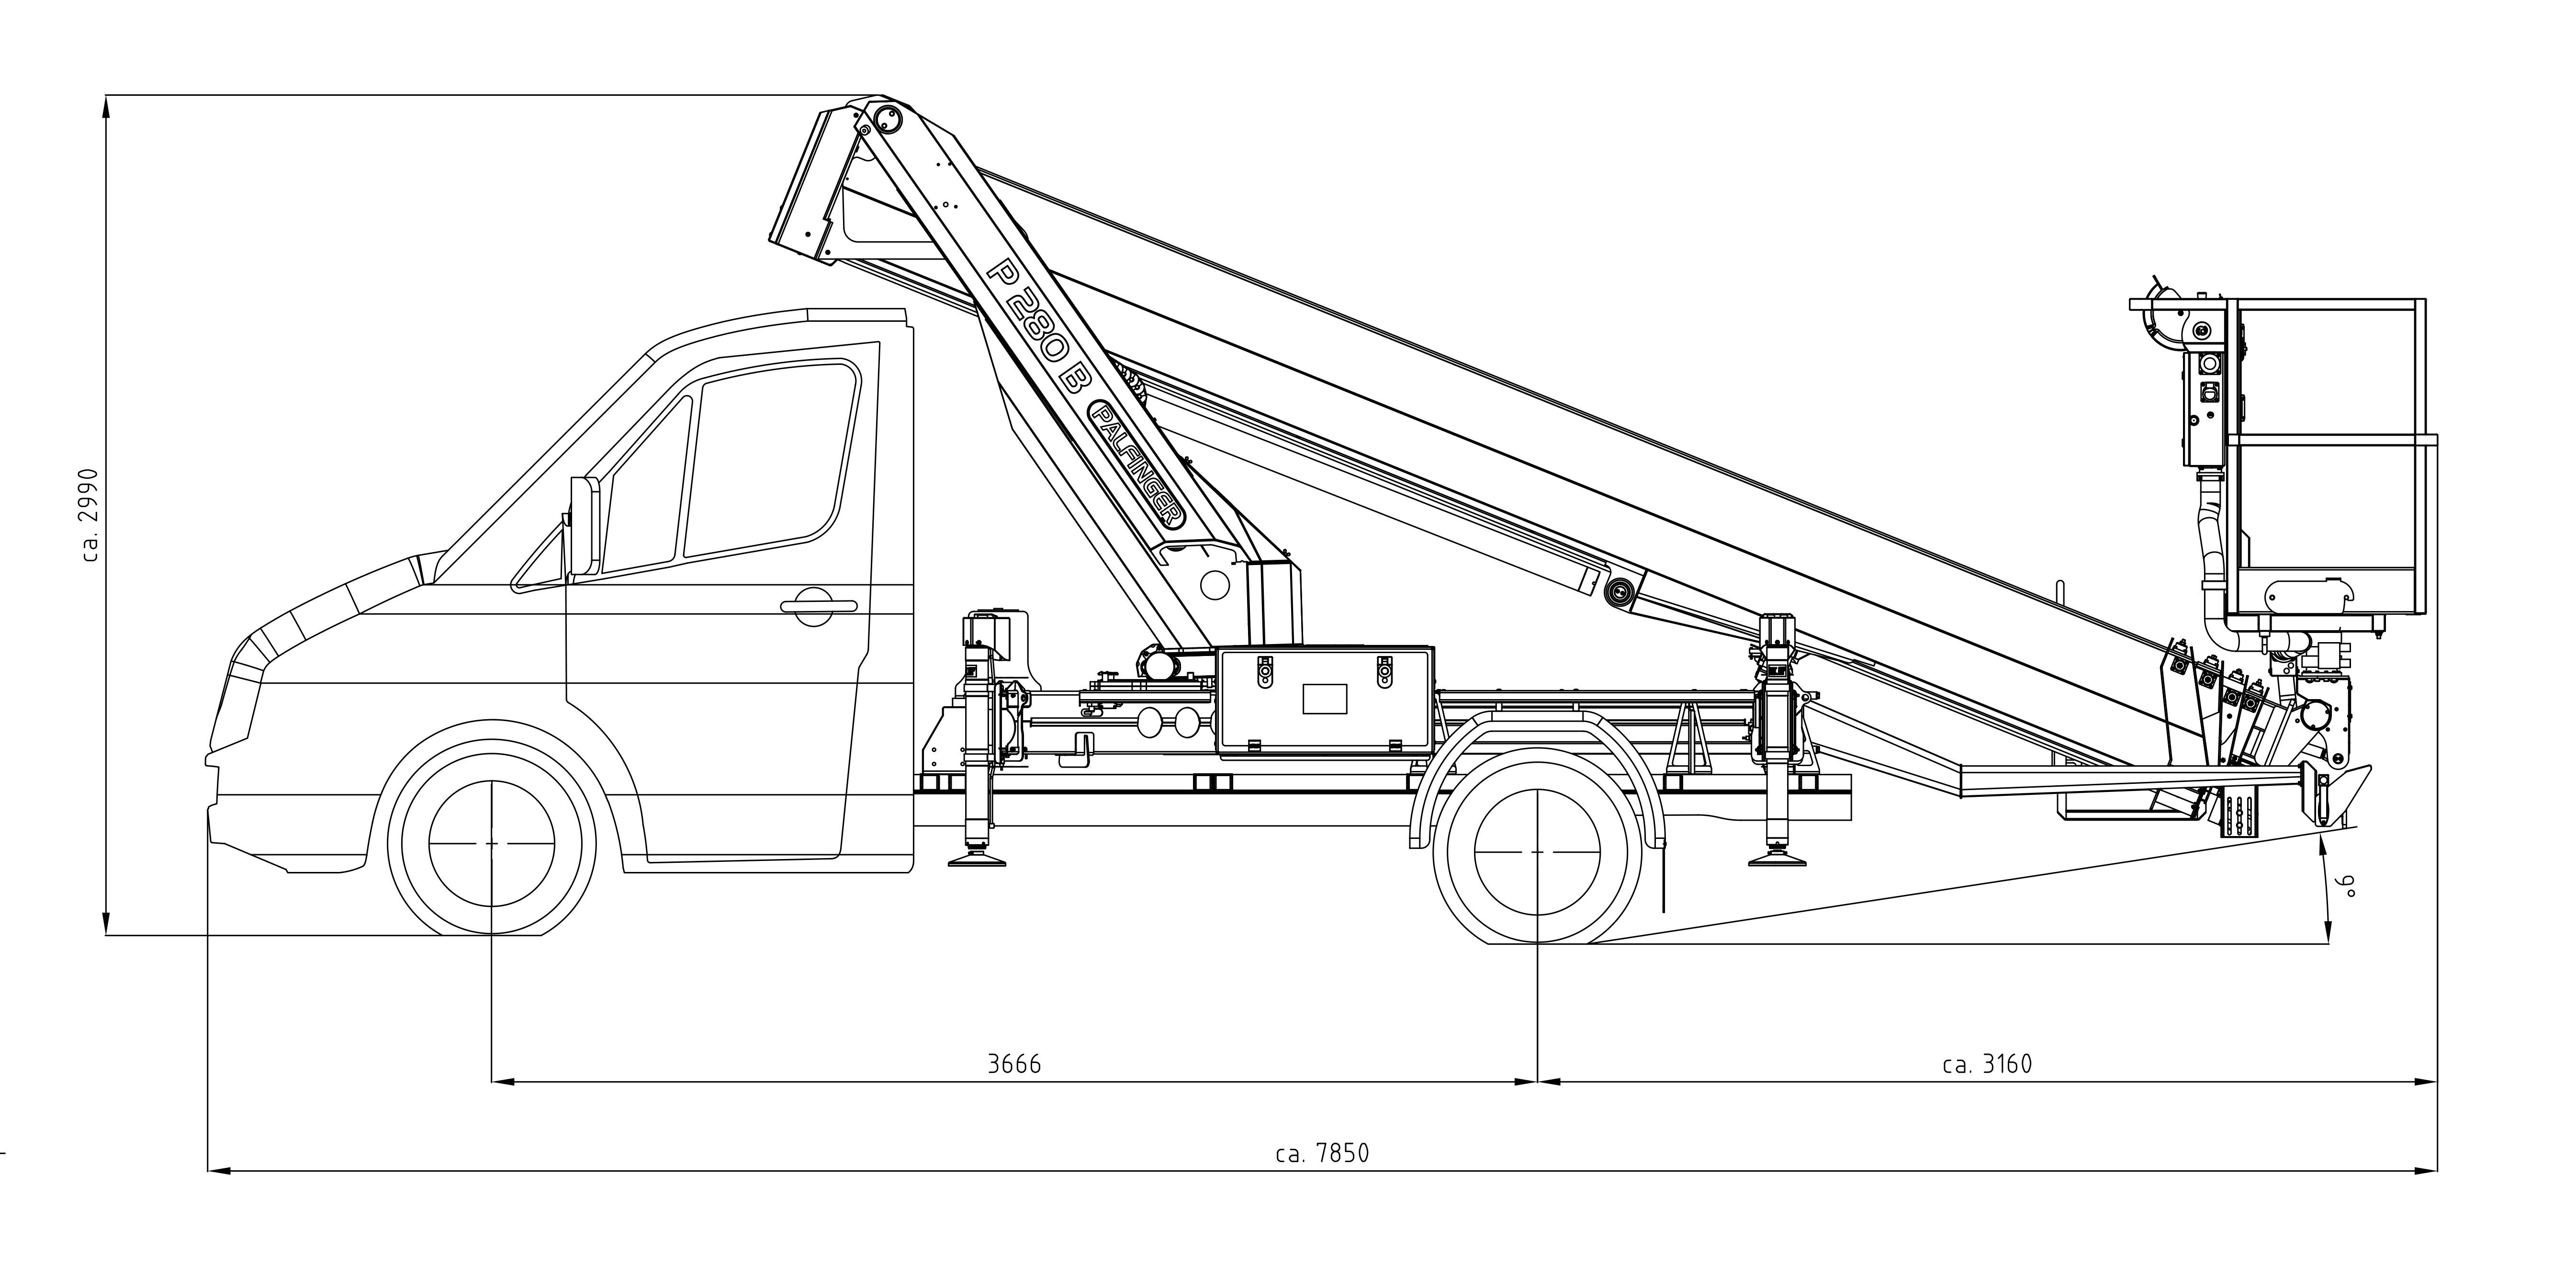 P 280 B technical drawing